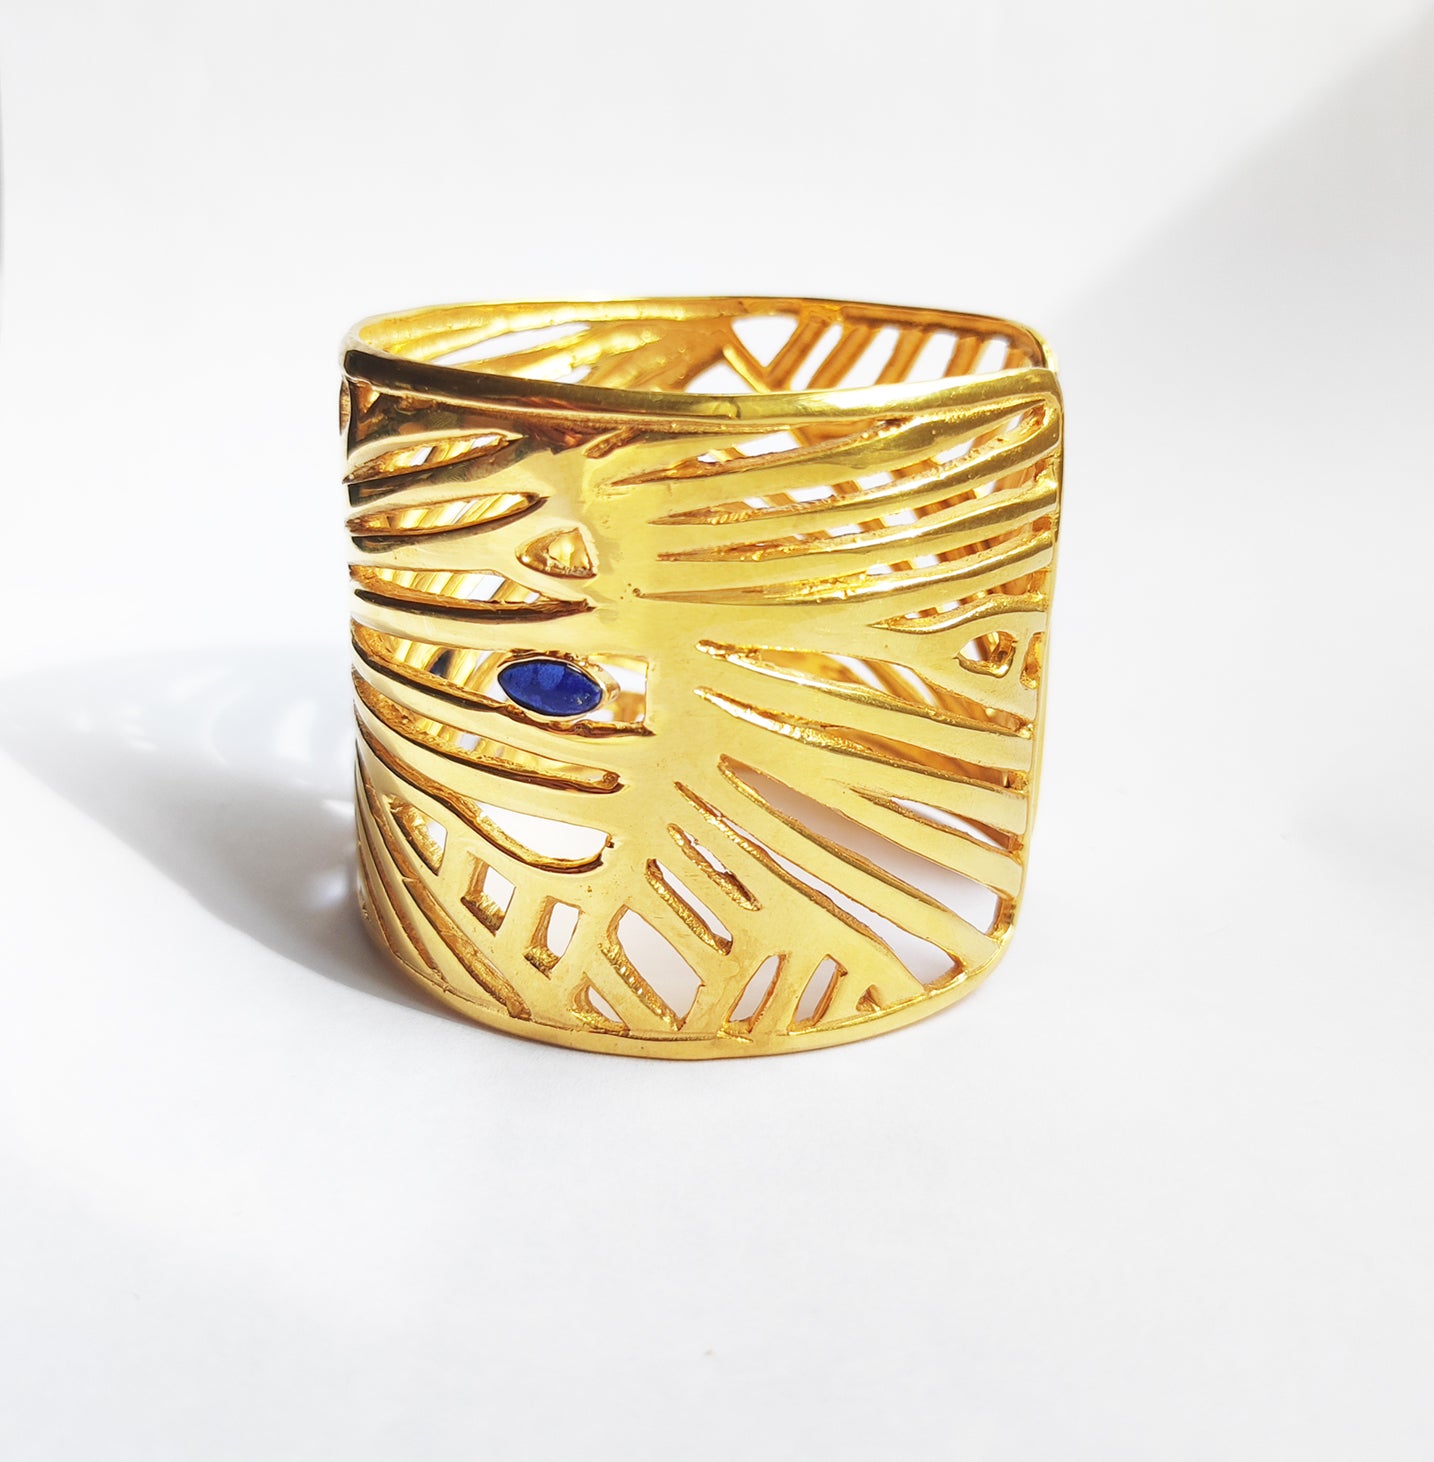 Cala Gold Cuff Bracelet with Lapis Lazuli